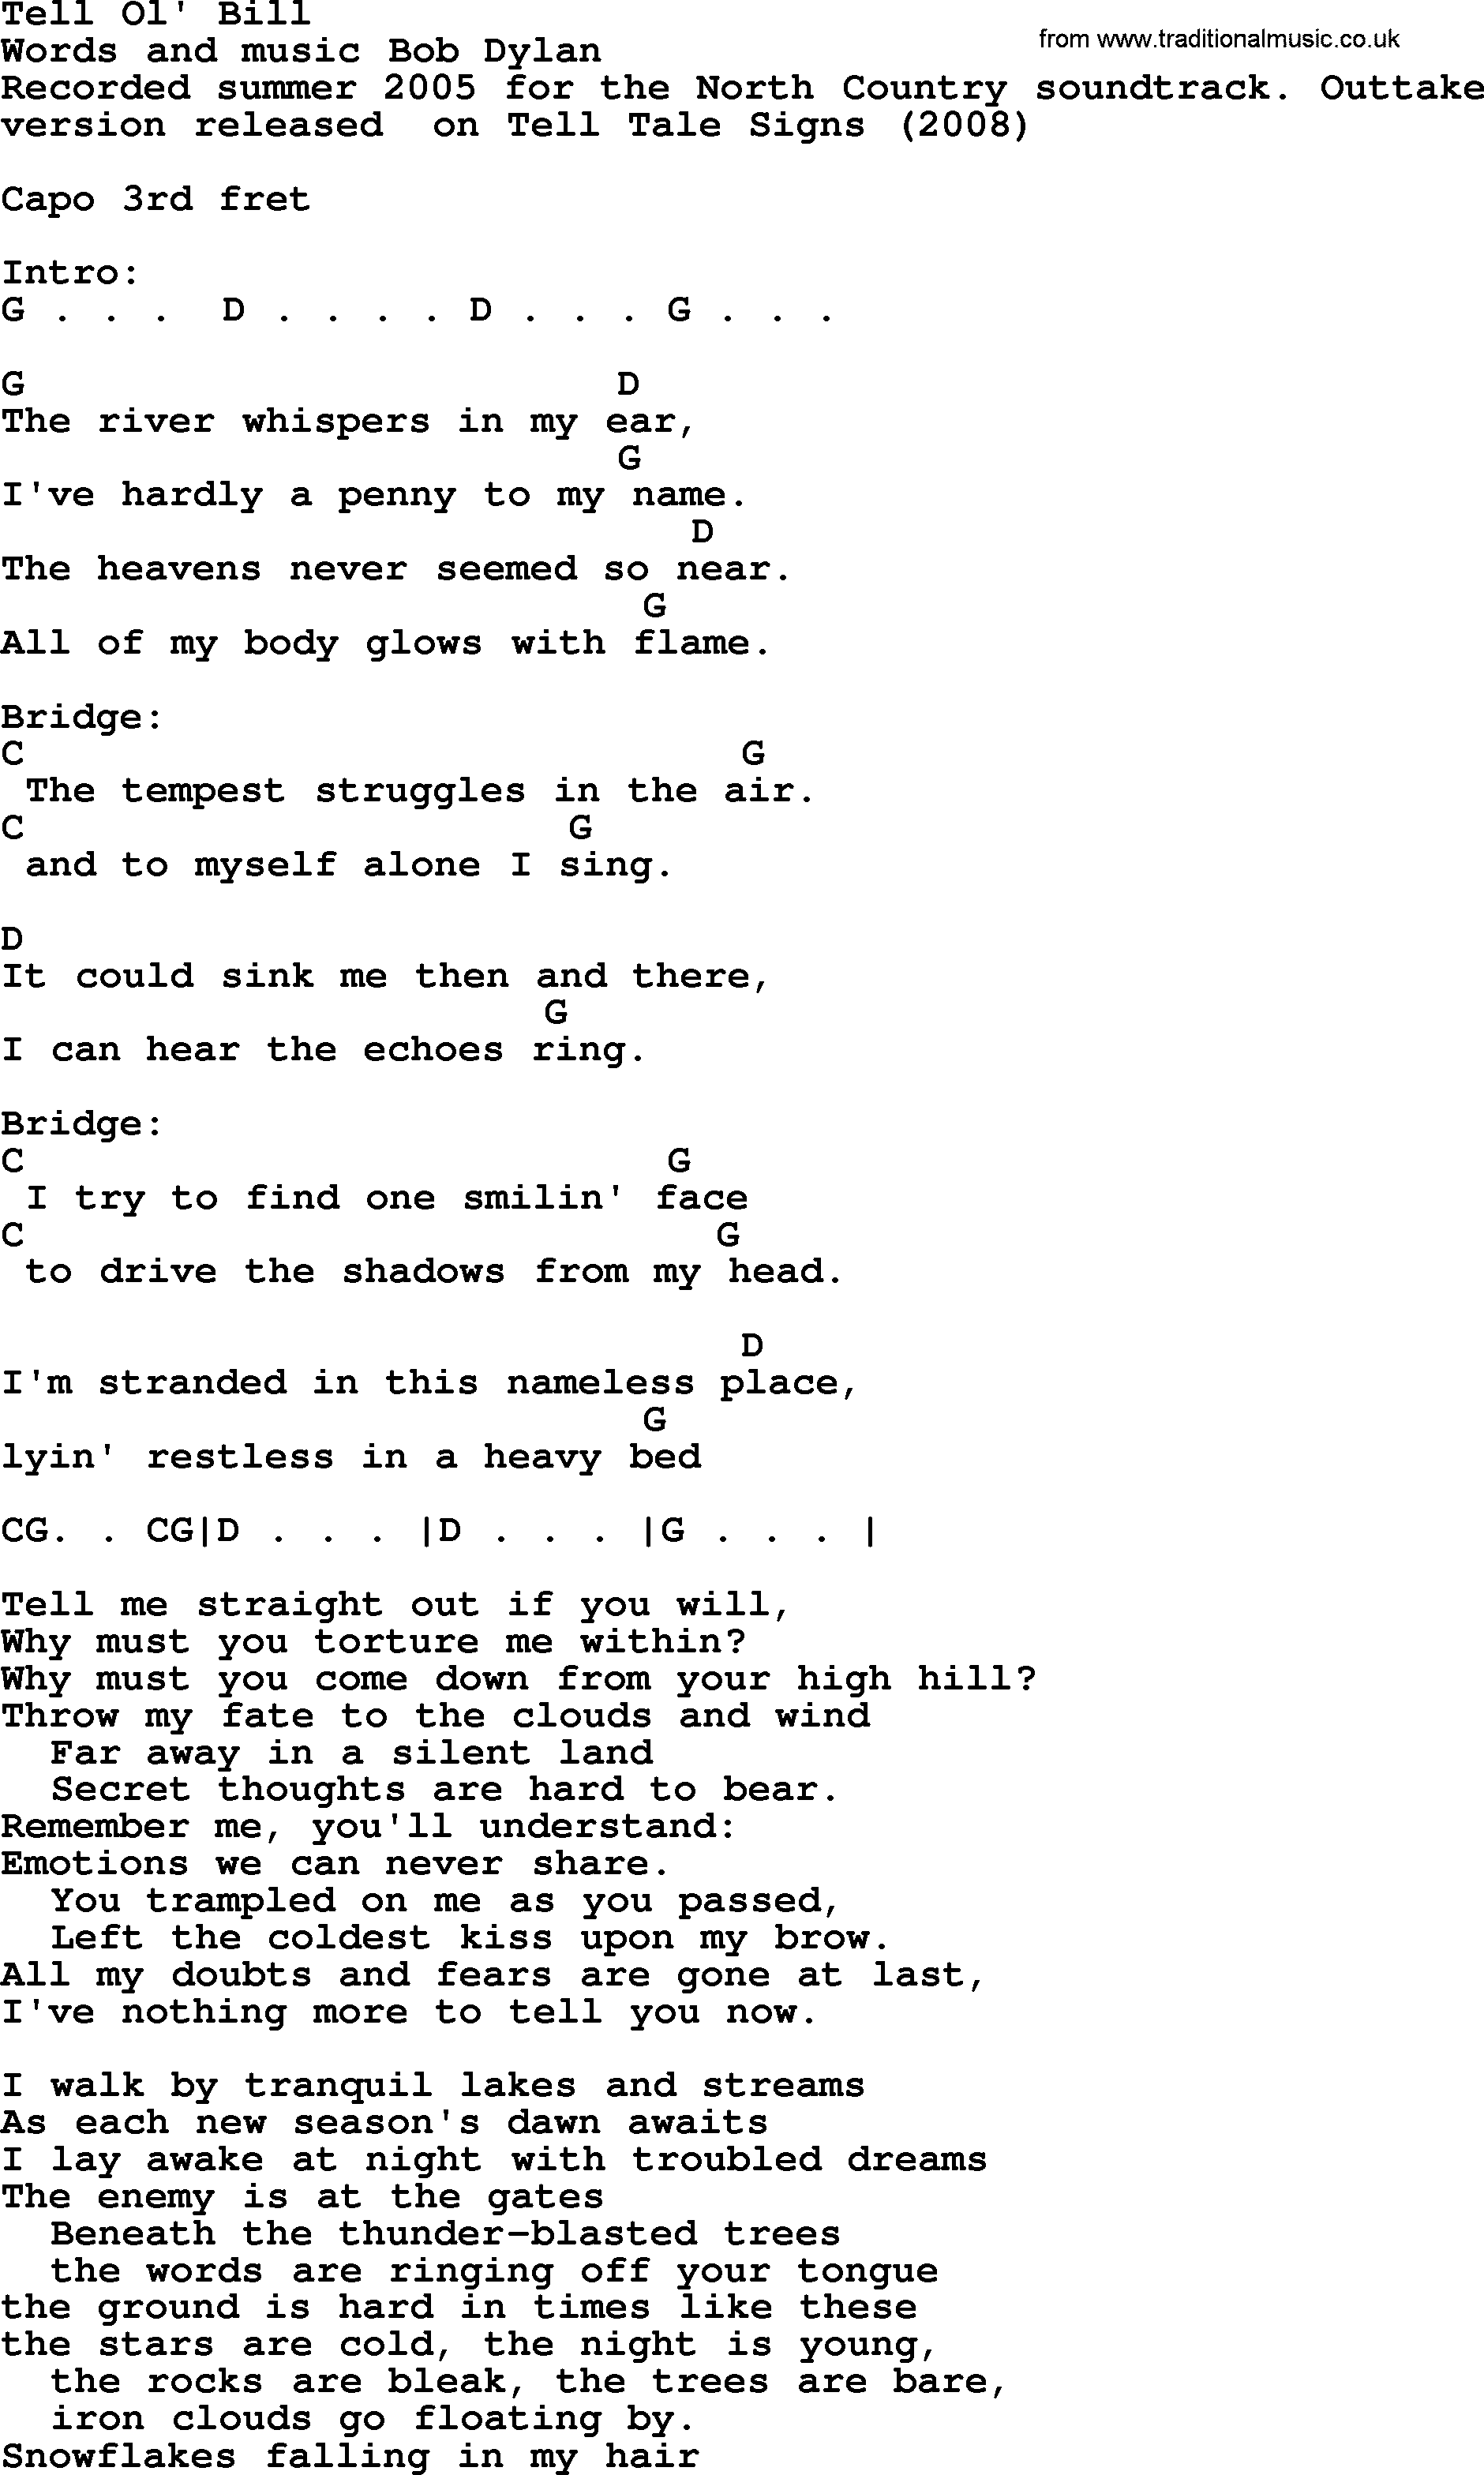 Bob Dylan song, lyrics with chords - Tell Ol' Bill